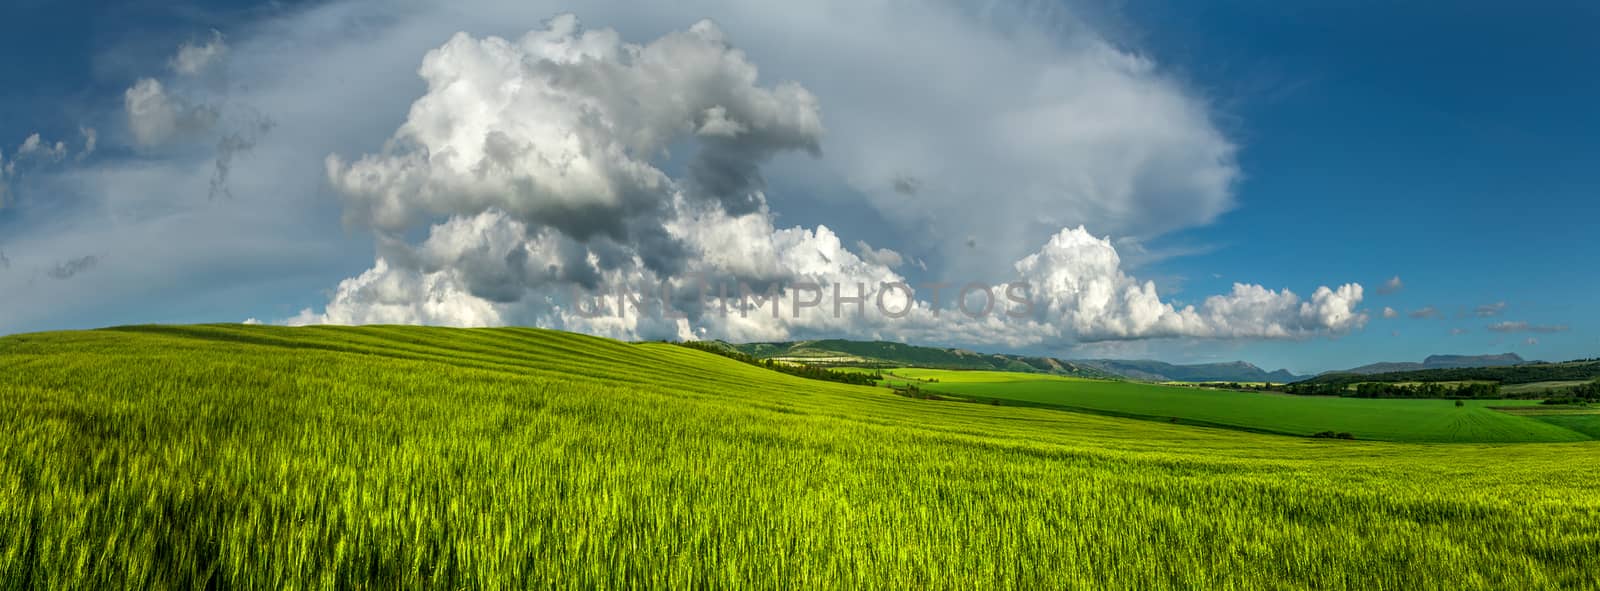 Panorama of wheat fields by fogen